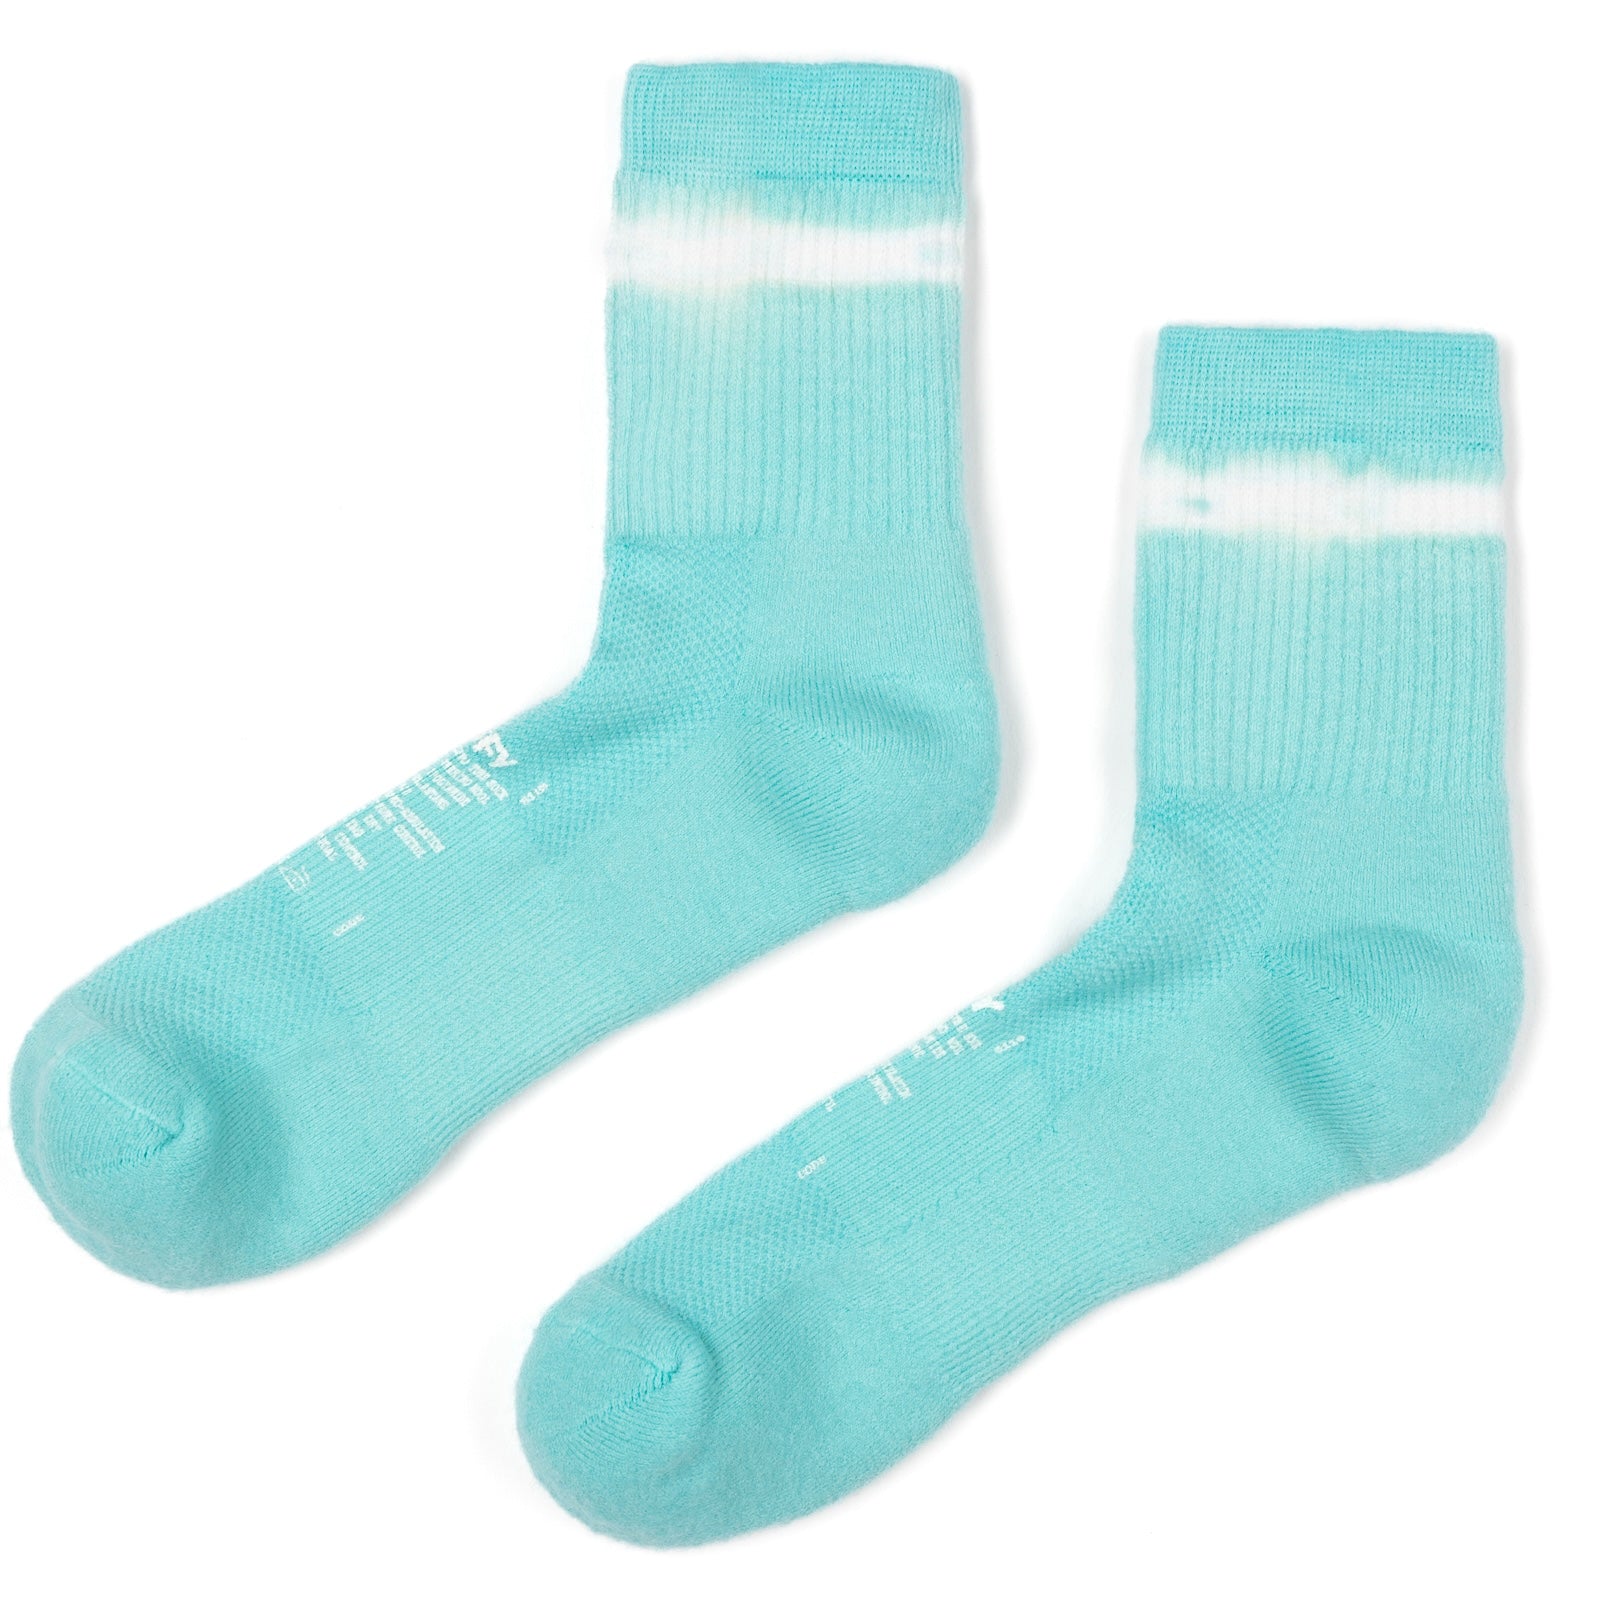 Satisfy - Merino Tube Socks (Yucca Tie-Dye)